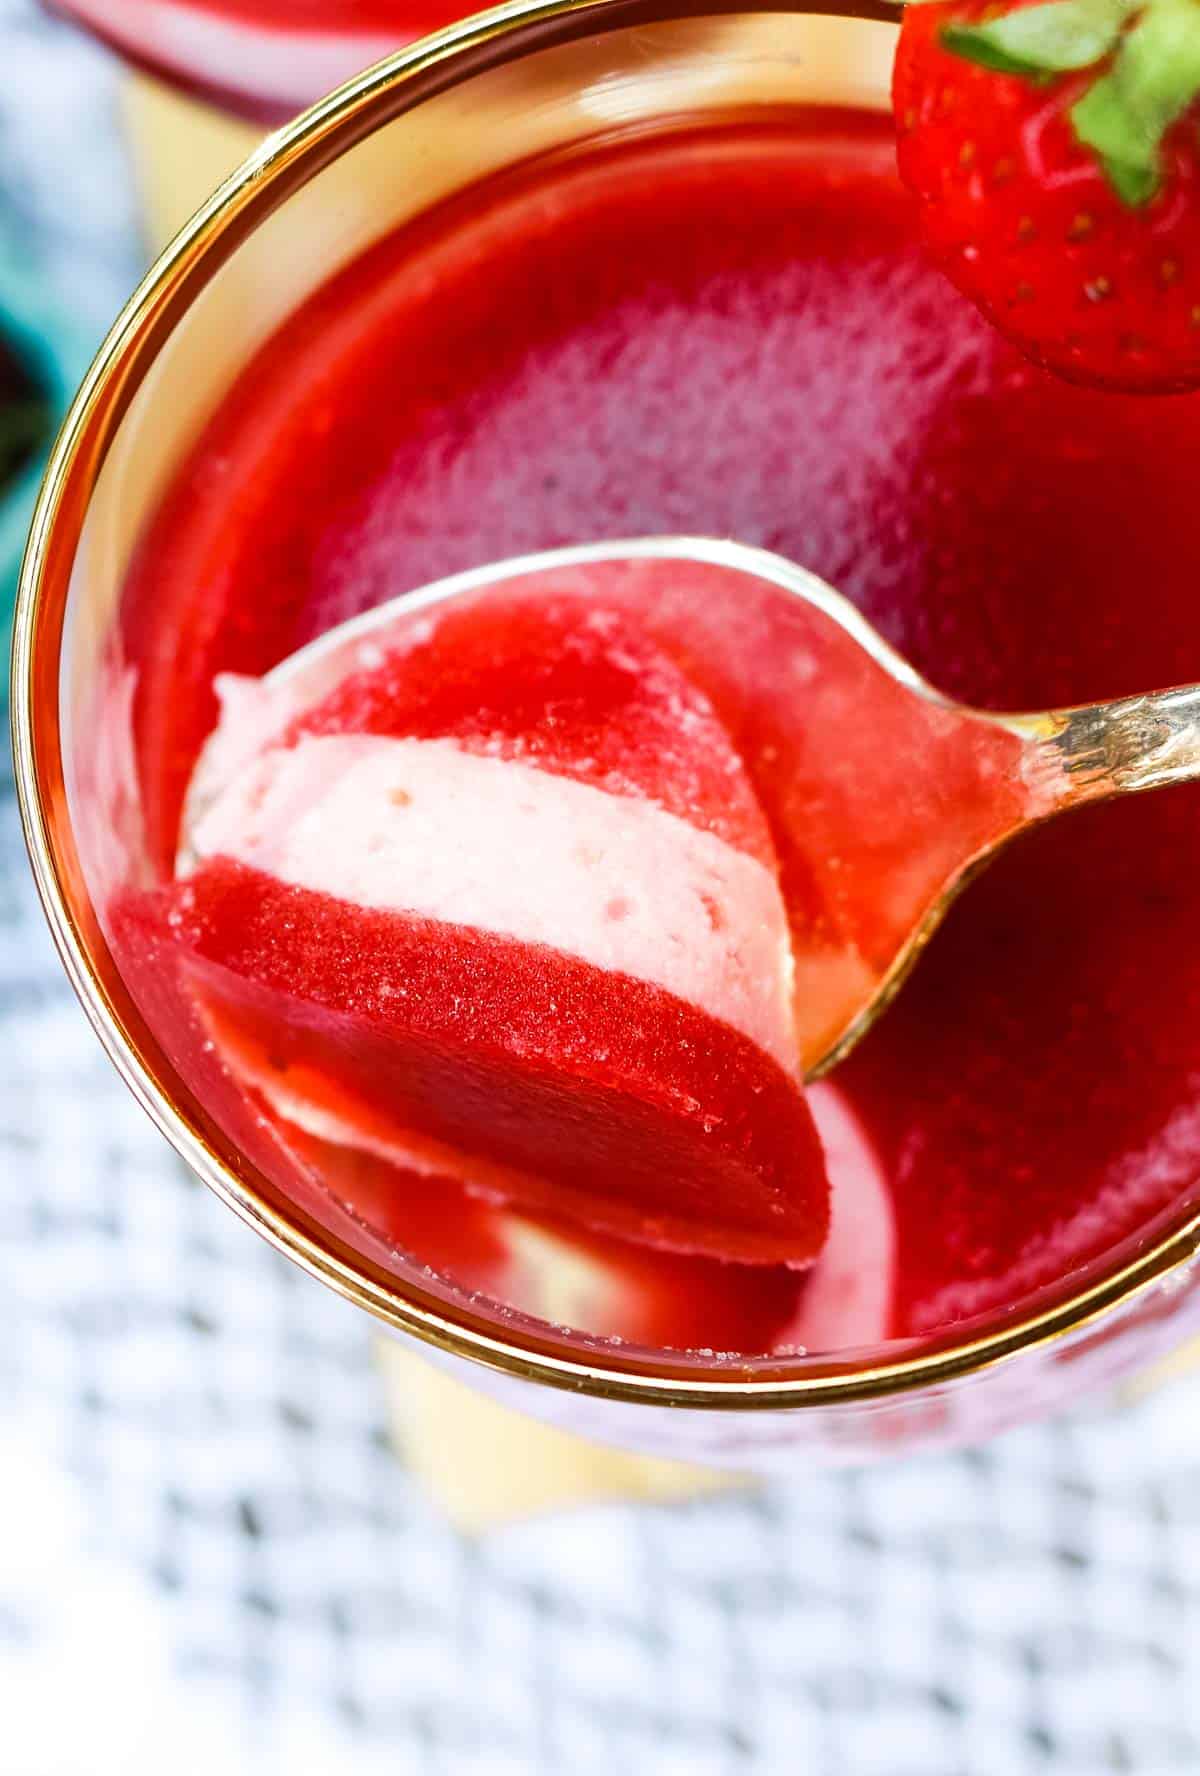 Strawberry gelatin dessert layered with cream gelatin and a spoon diggin in.